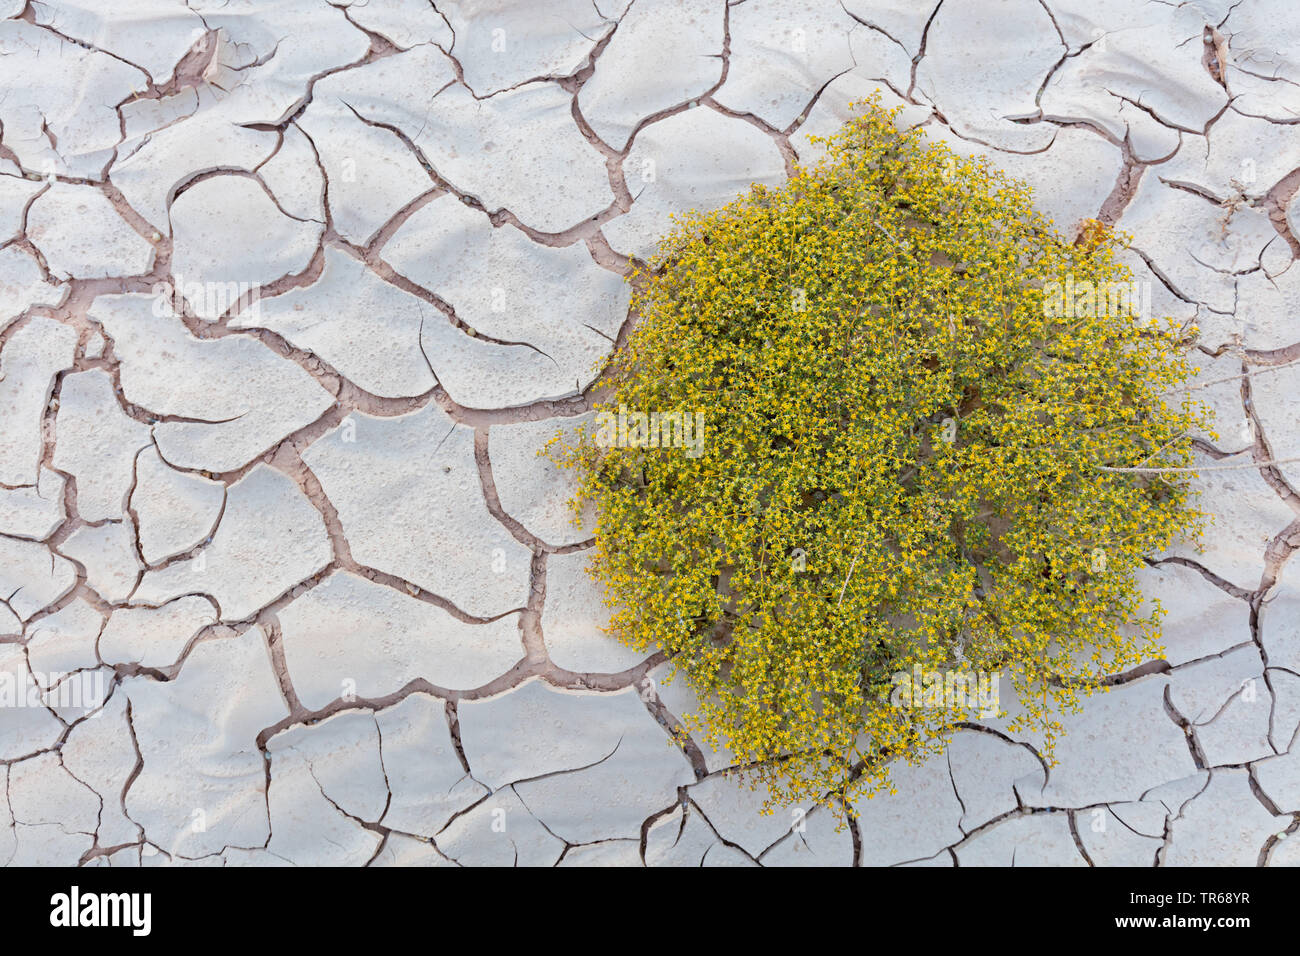 Trockener Boden eines ehemaligen Akko, Israel Stockfoto